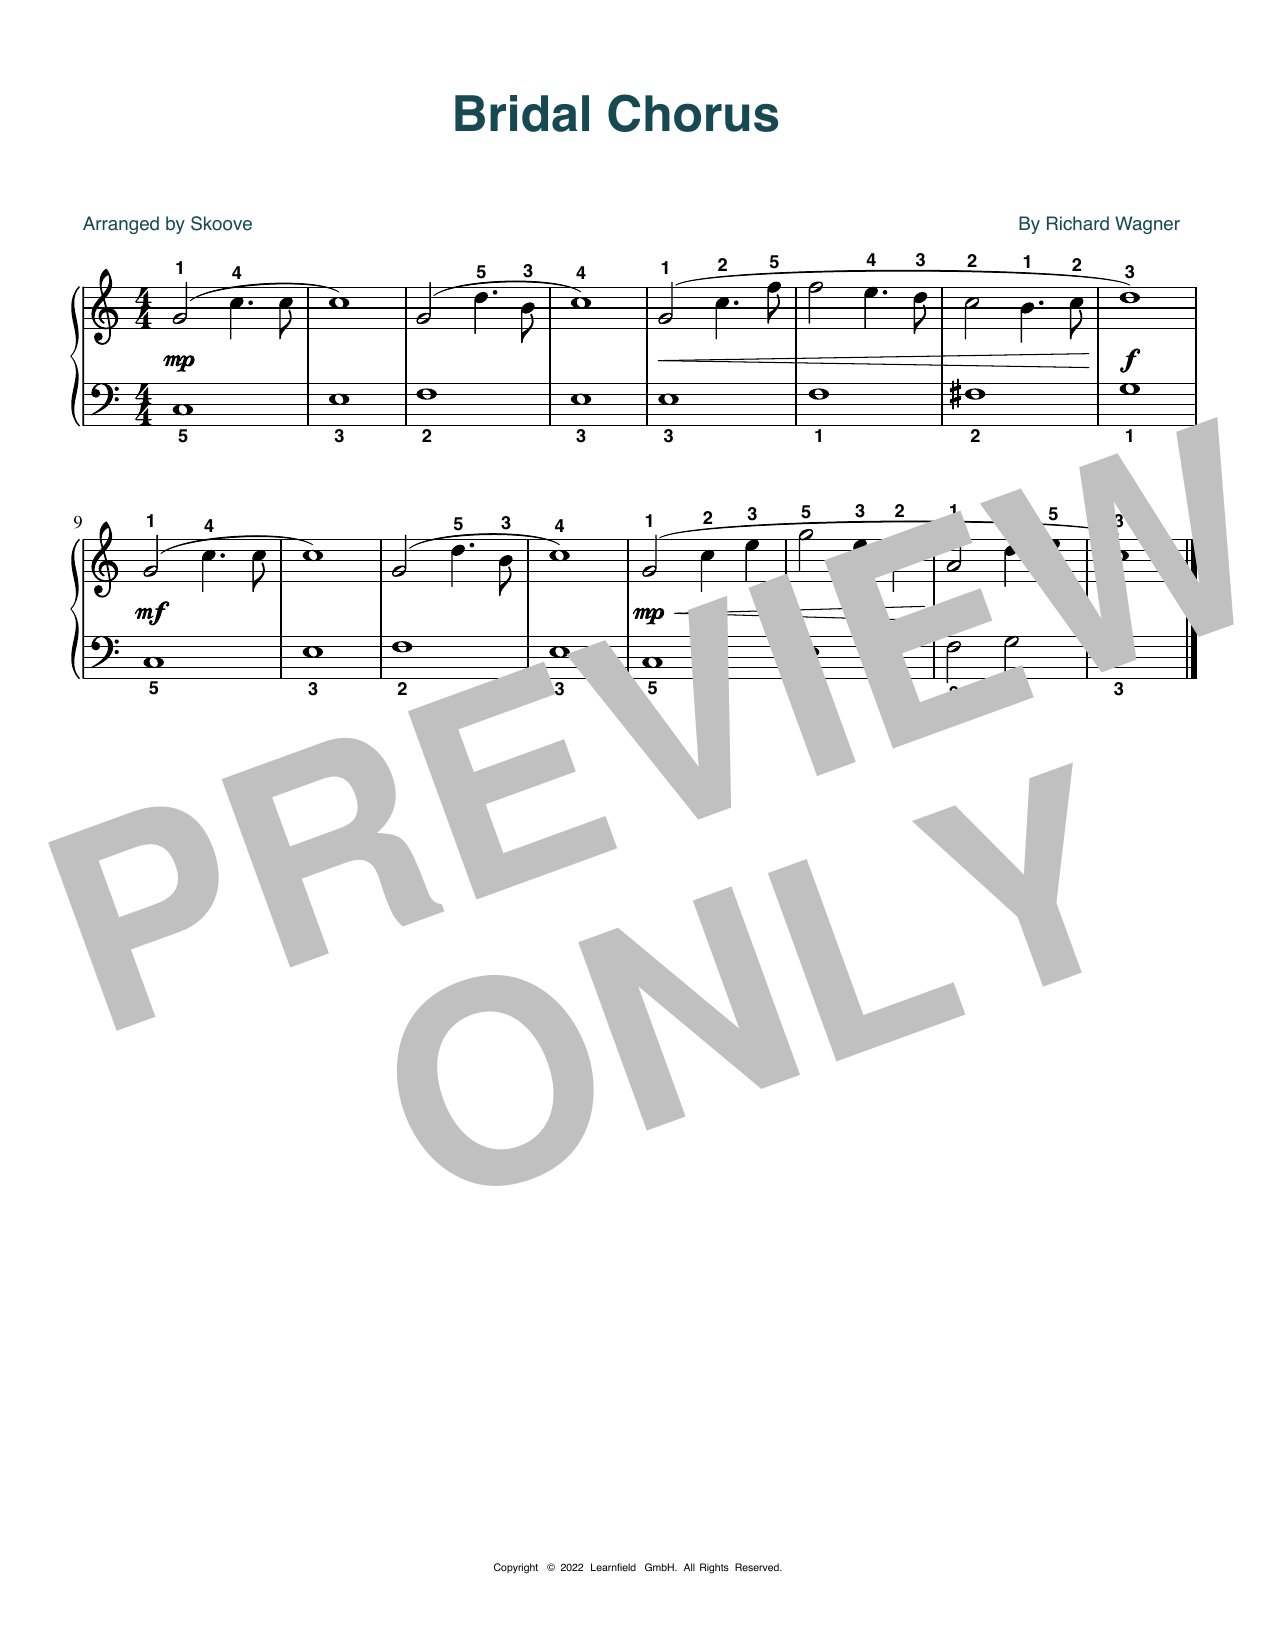 Richard Wagner Bridal Chorus (arr. Skoove) Sheet Music Notes & Chords for Beginner Piano (Abridged) - Download or Print PDF